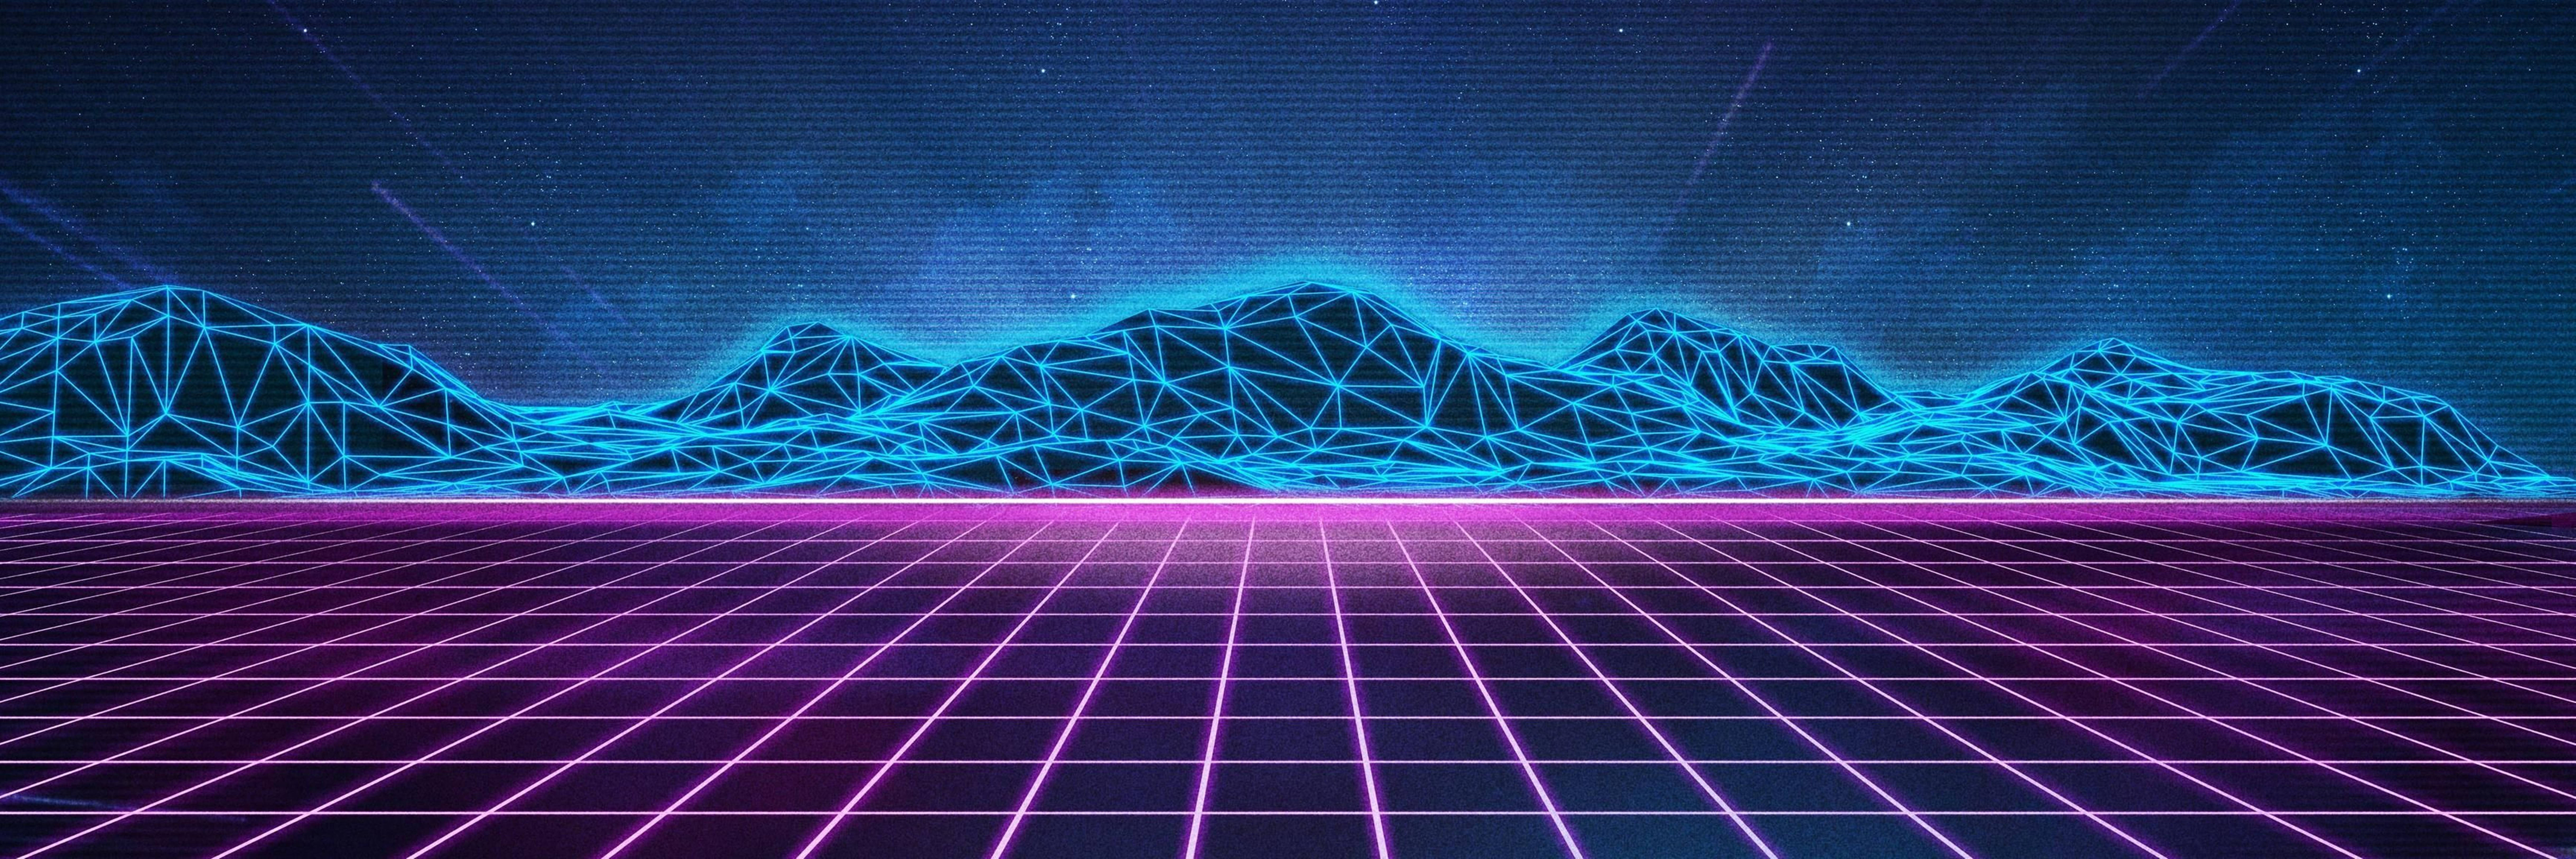 Retro Neon Grid Field Blue Mountains 4k Background